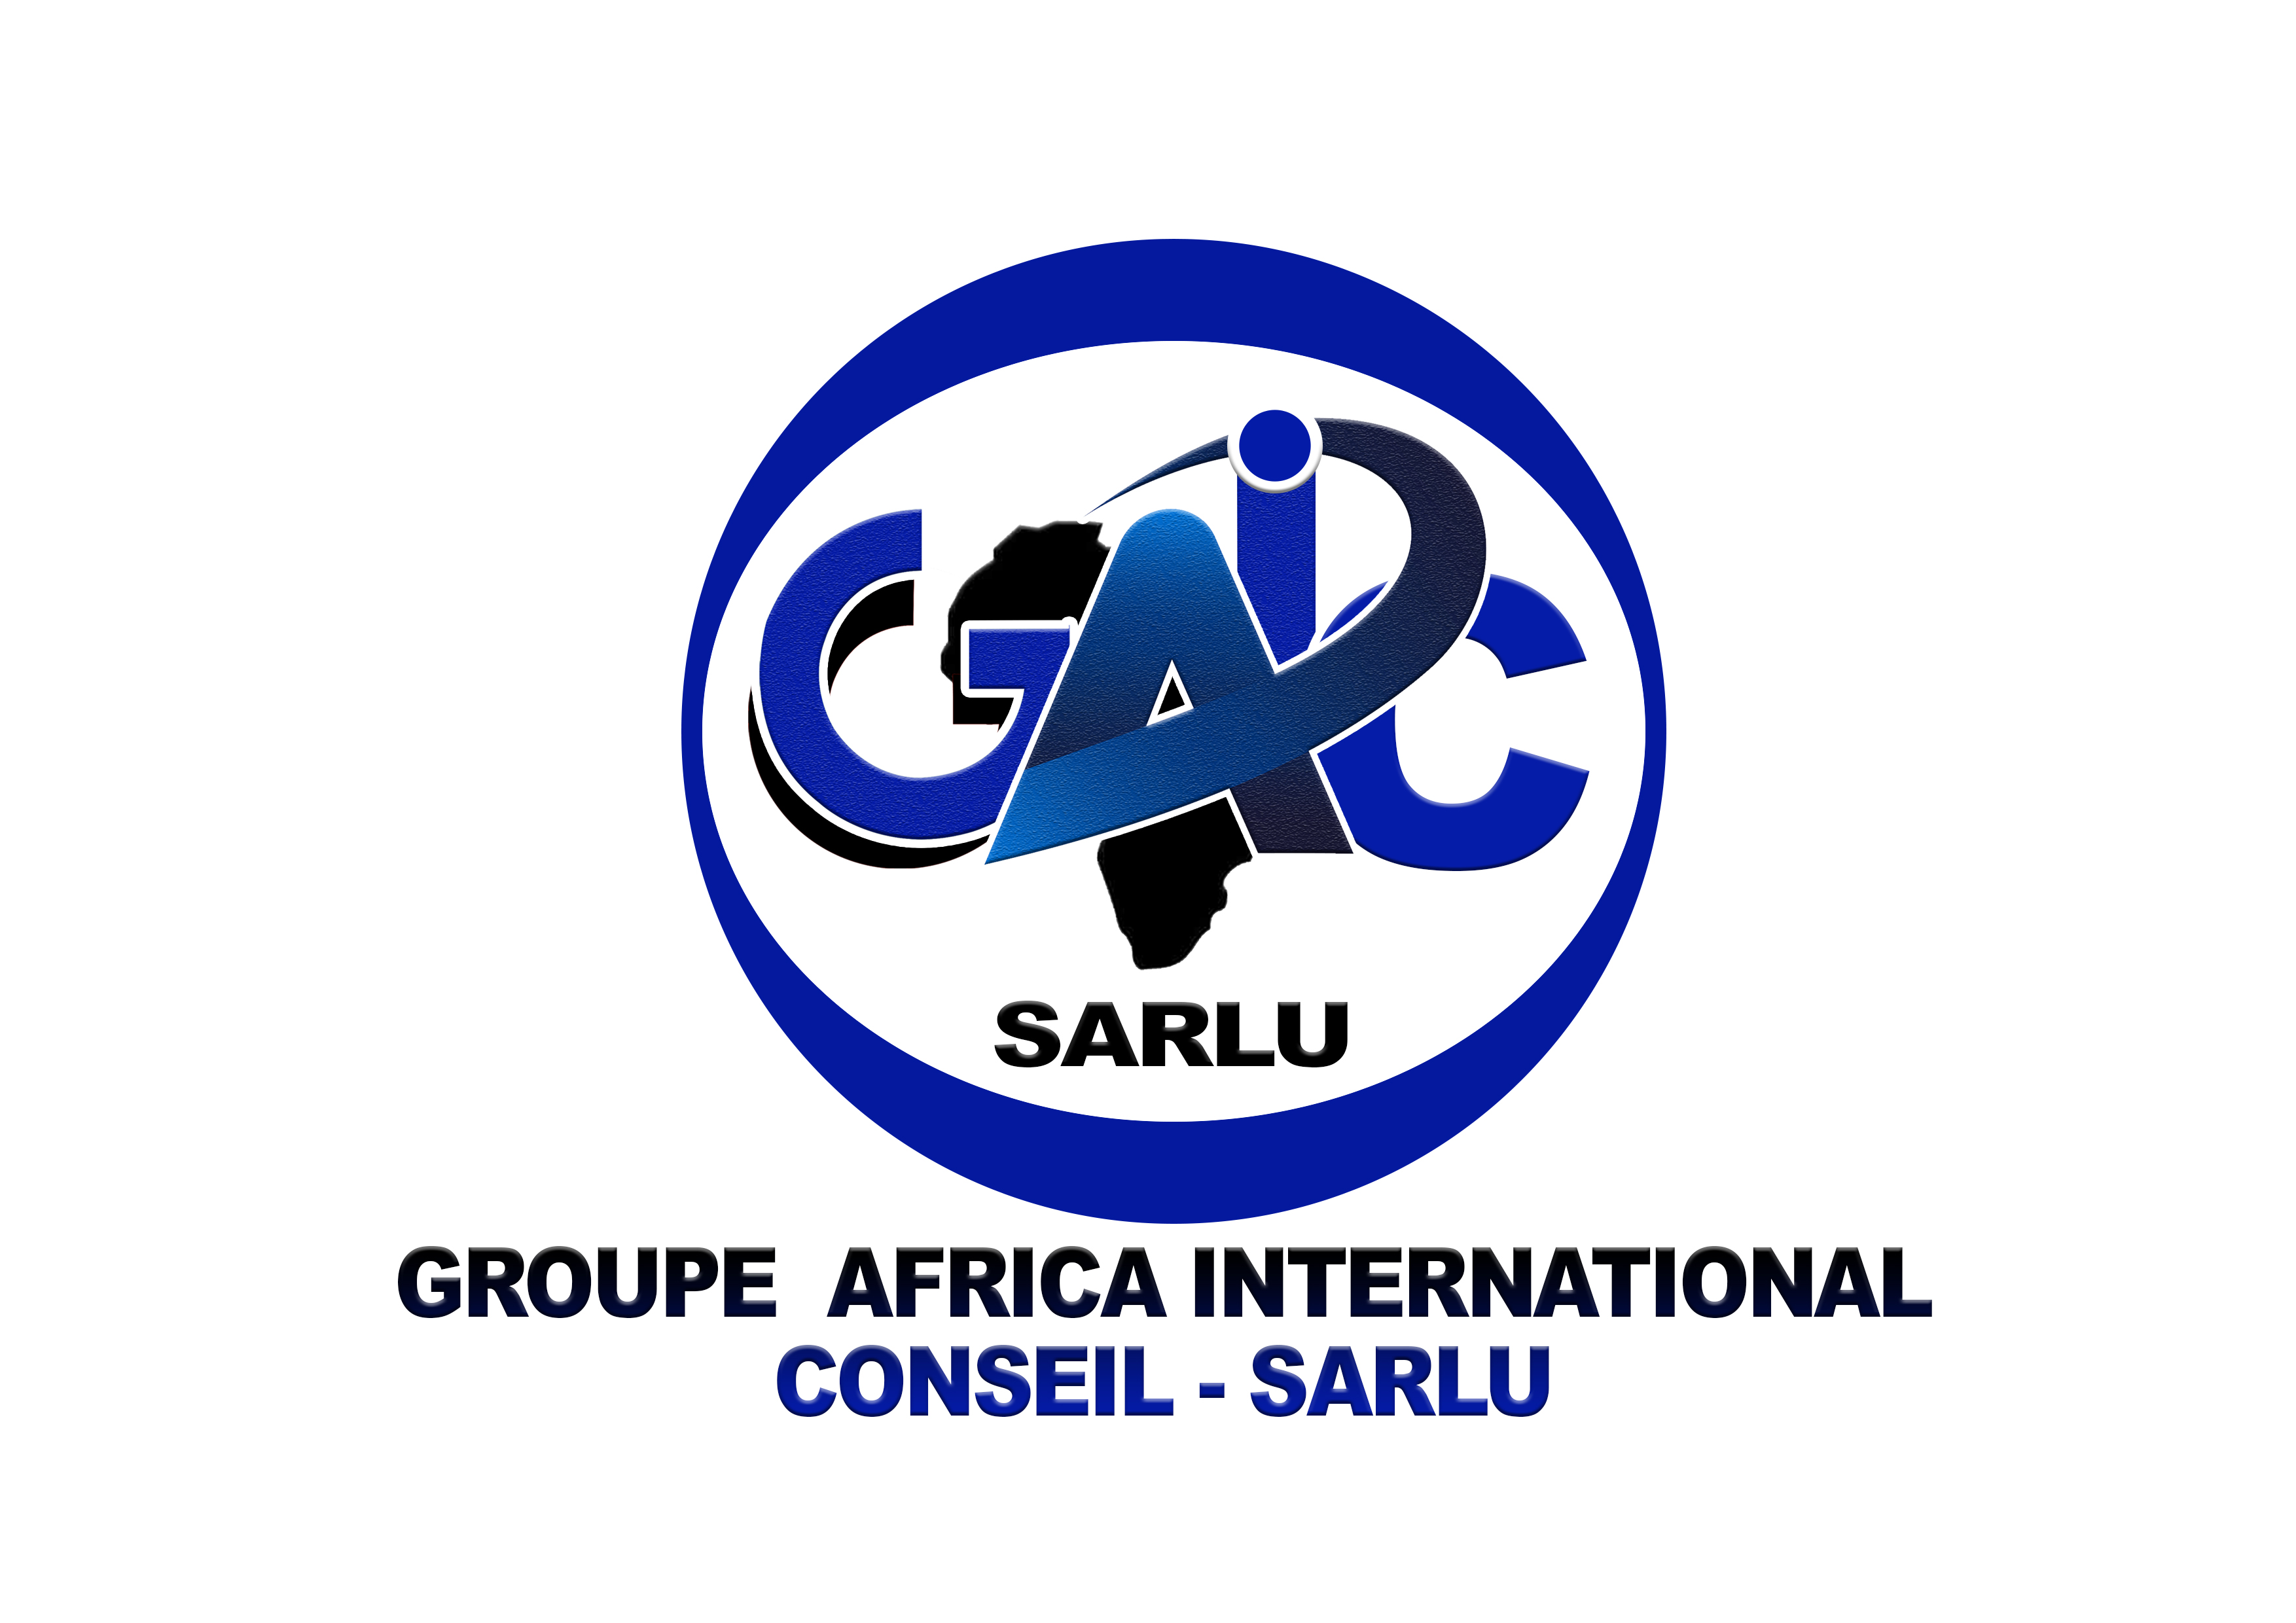 Appel d'offre : le Groupe Africa International Conseil SARLU recrute un Agent de Comptoir - Infosreelles.com